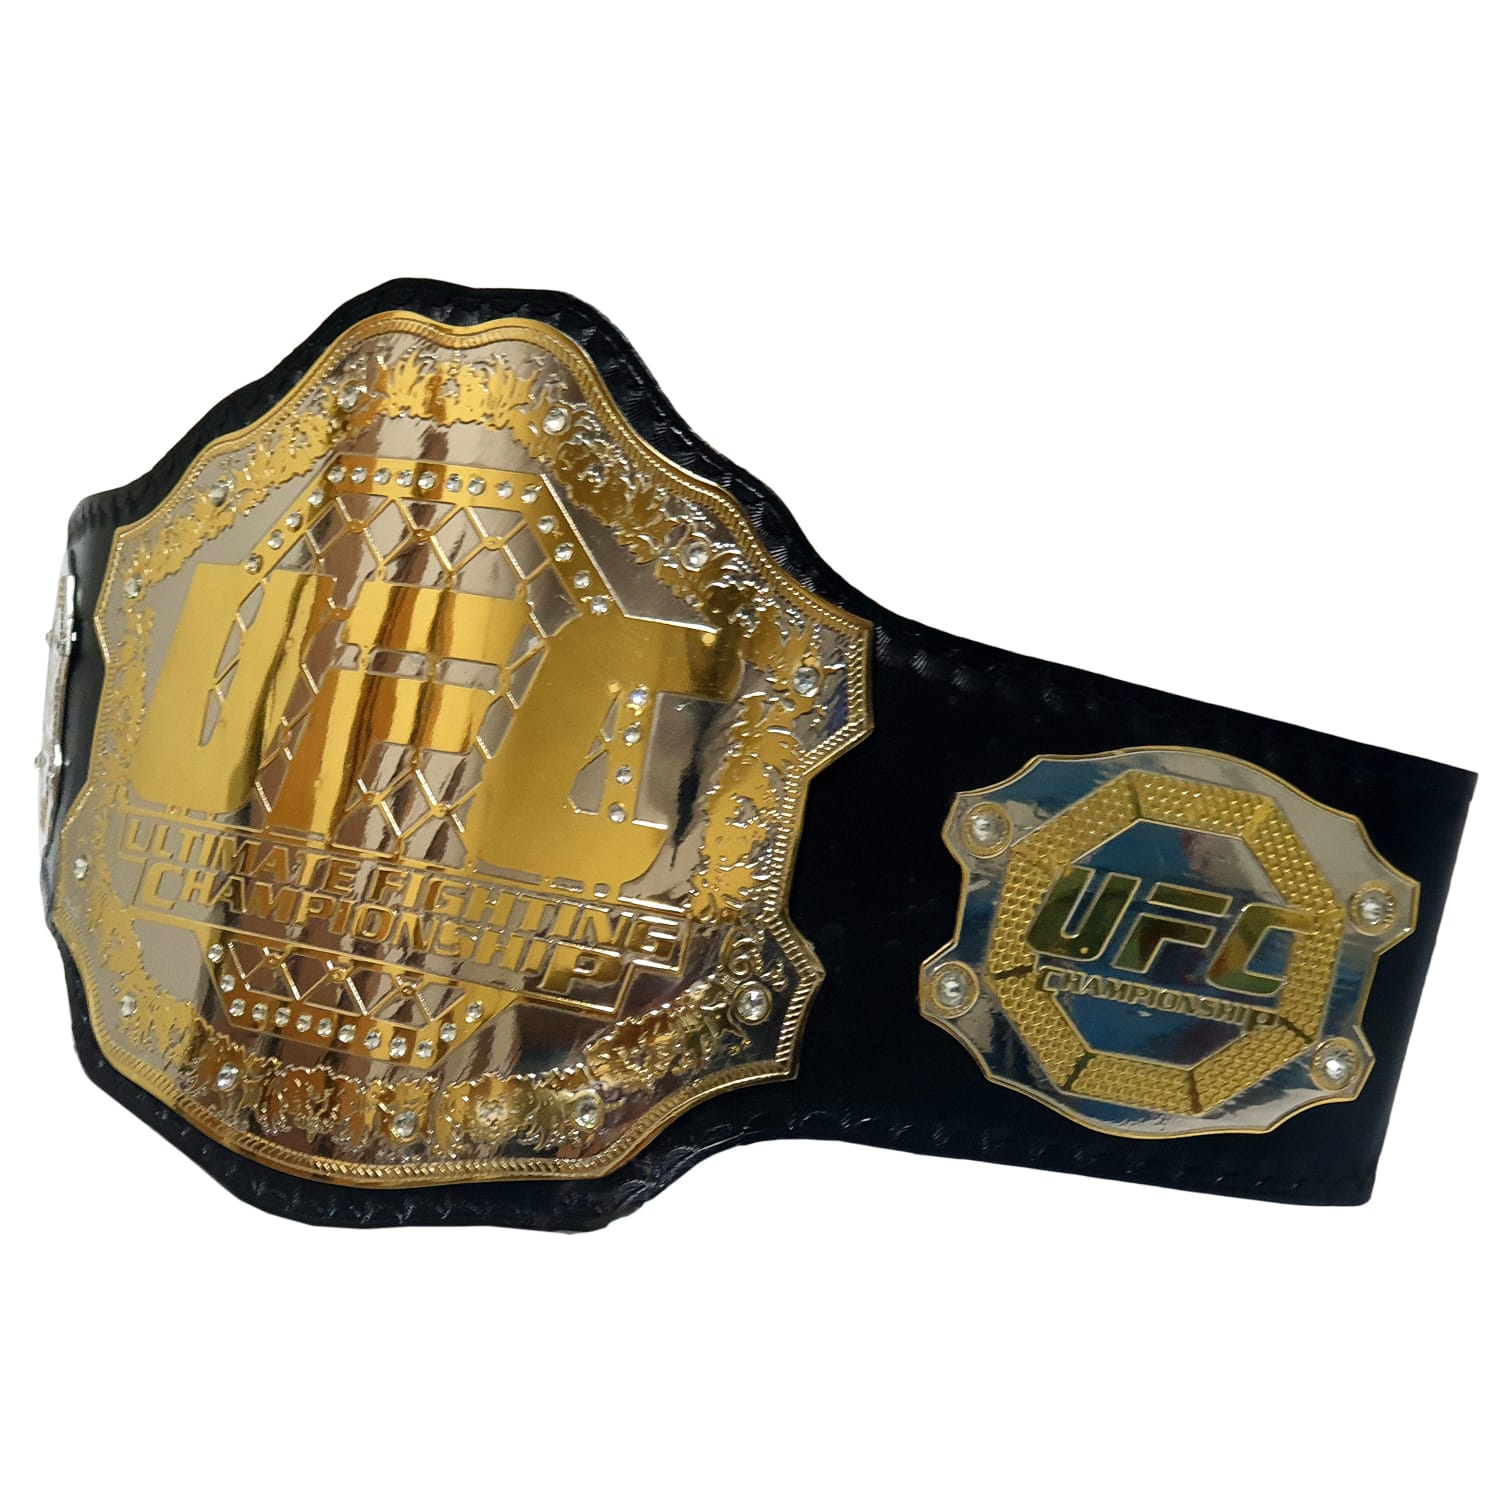 World's Greatest Championship Wresling Brass Belt-017